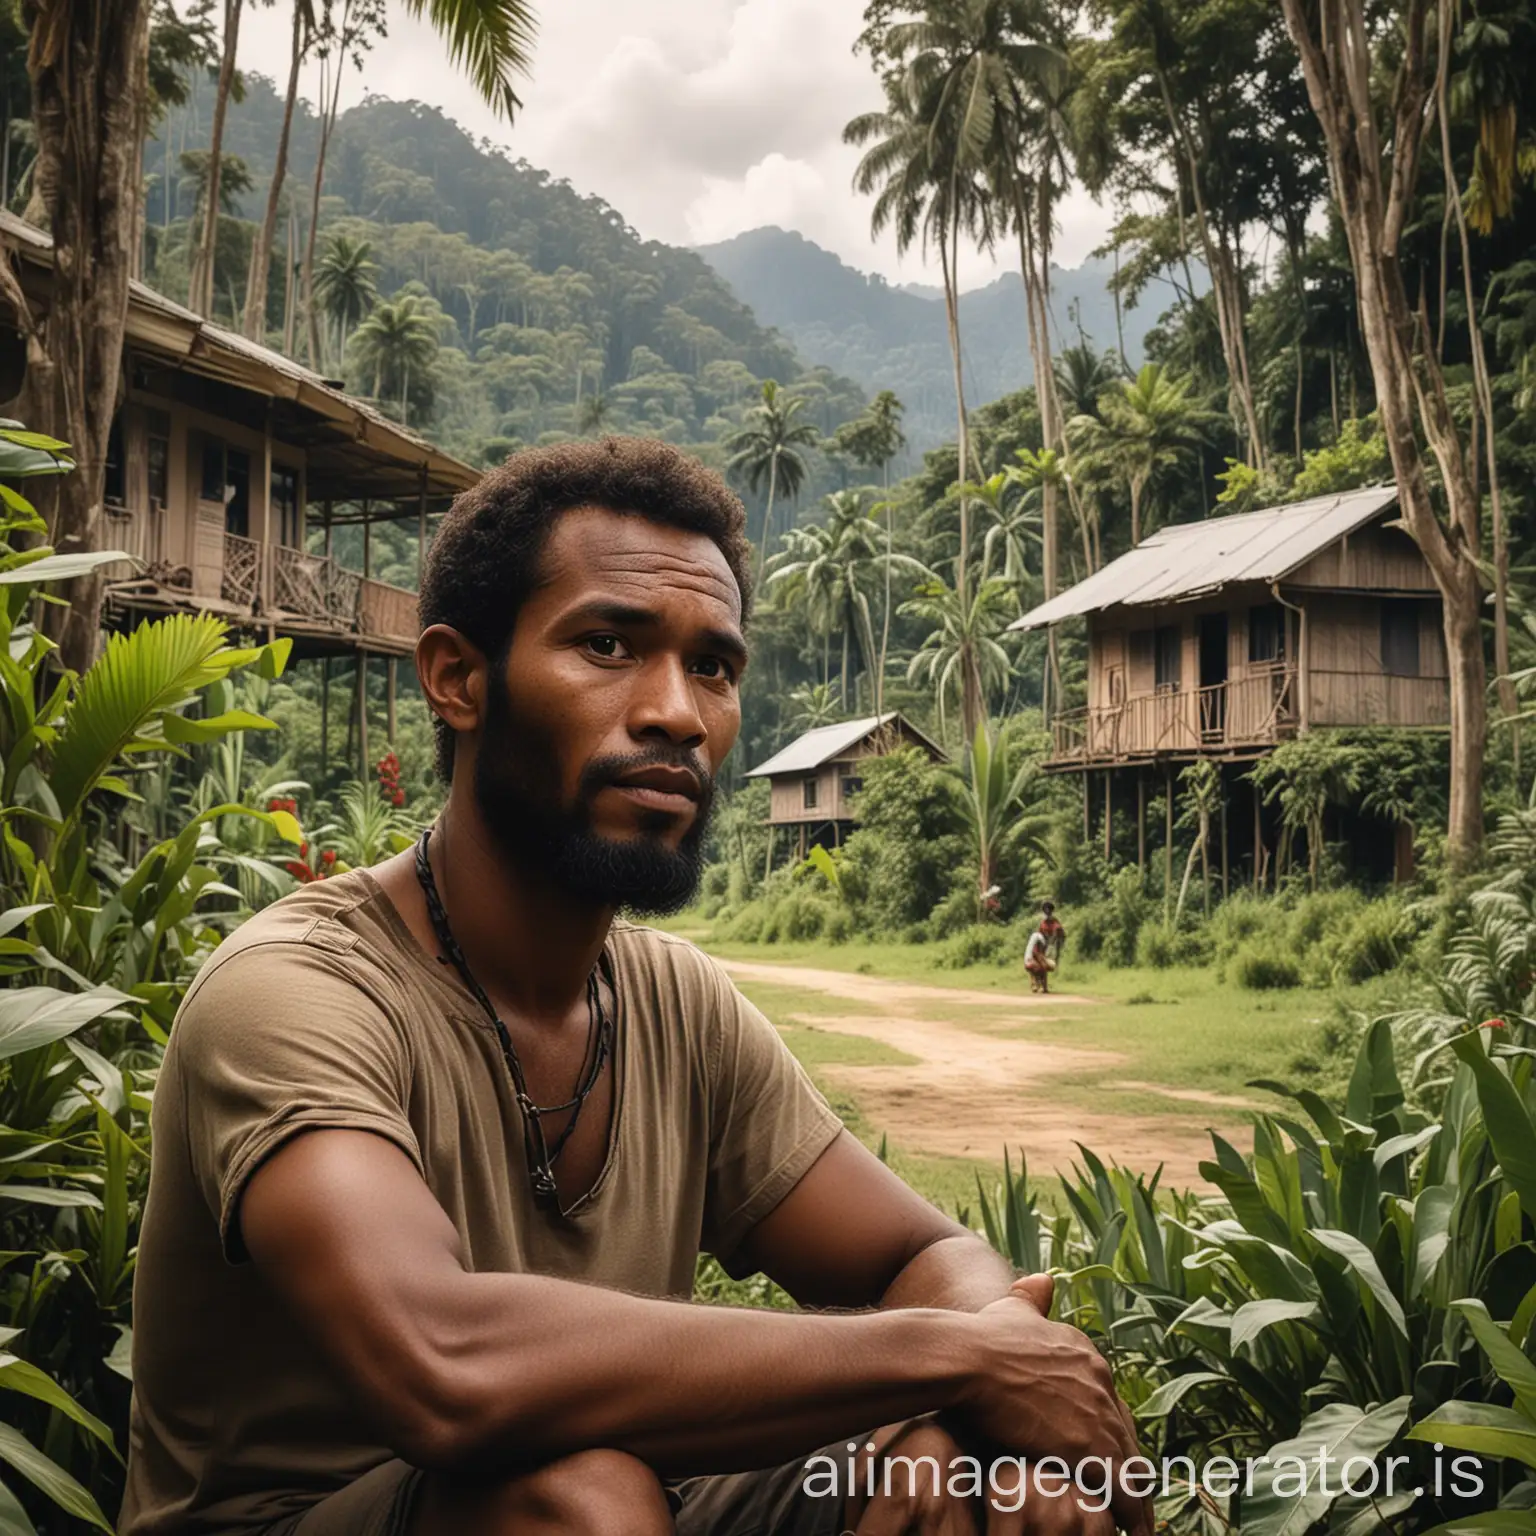 Papuan-Father-Yohan-Sitting-Amidst-Lush-Jungle-Backdrop